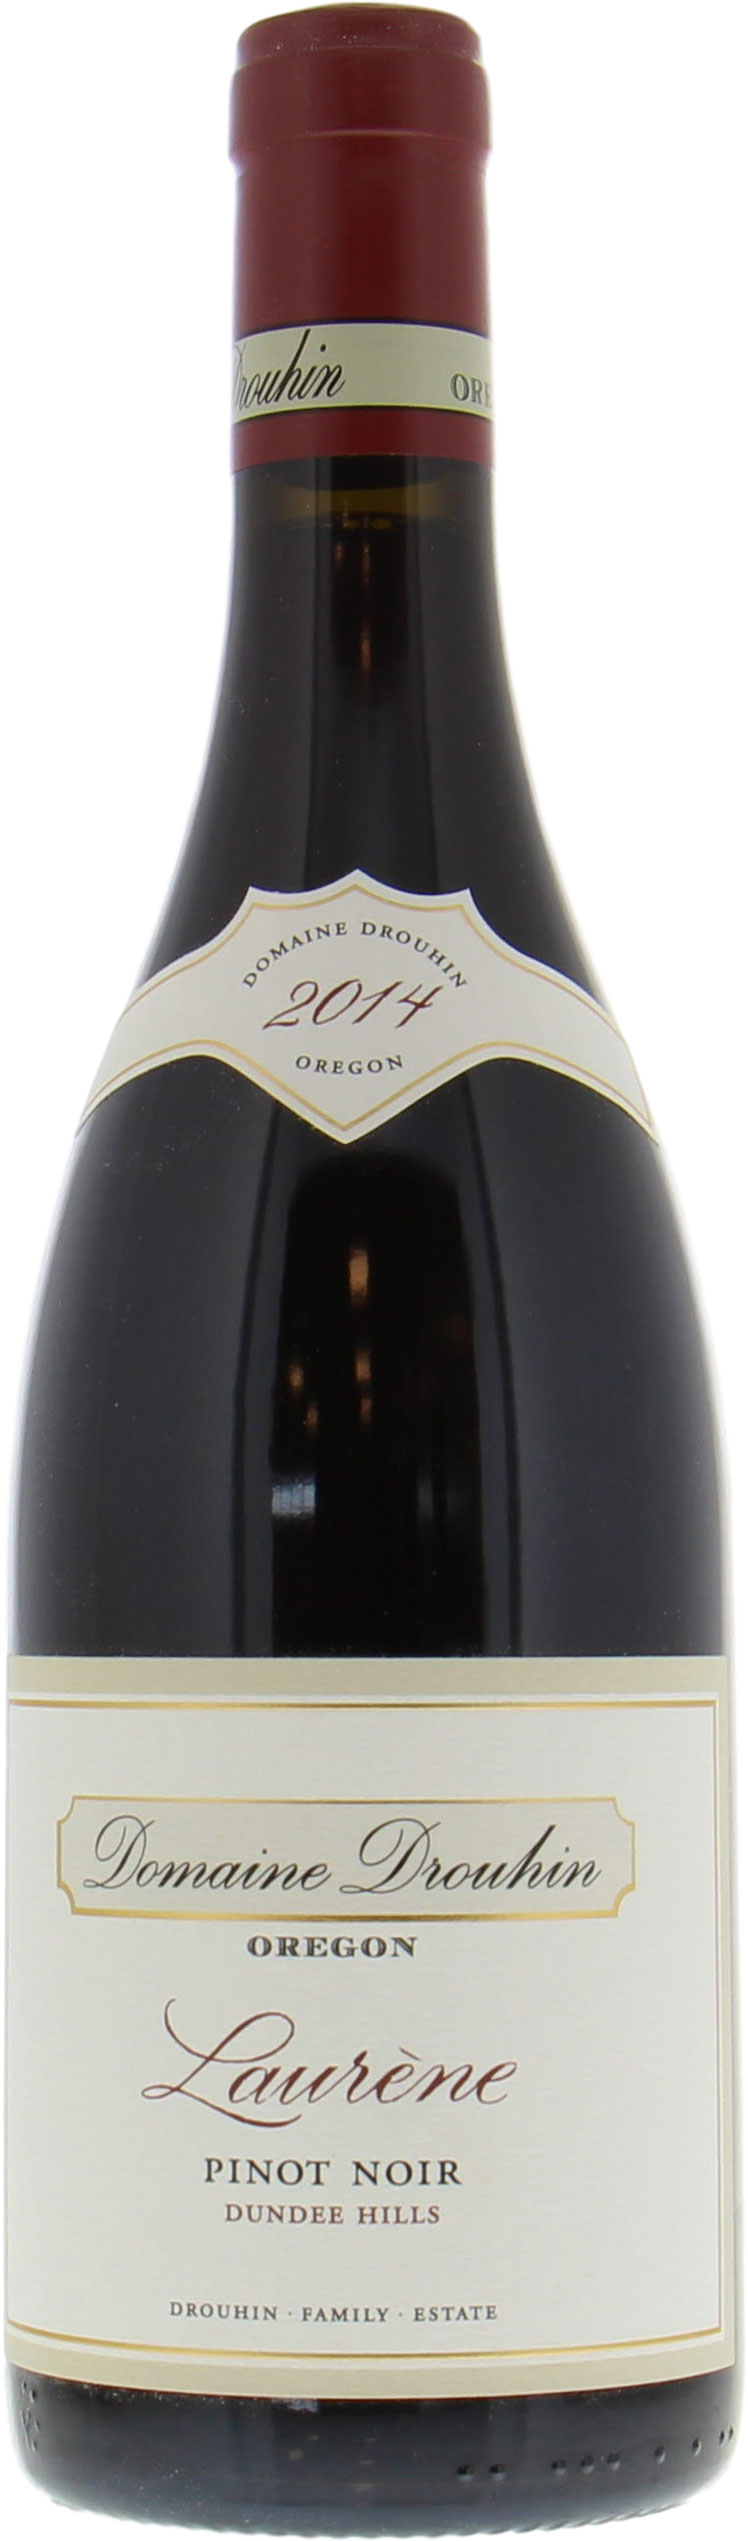 Domaine Drouhin - Cuvee Laurene Pinot Noir 2014 Perfect